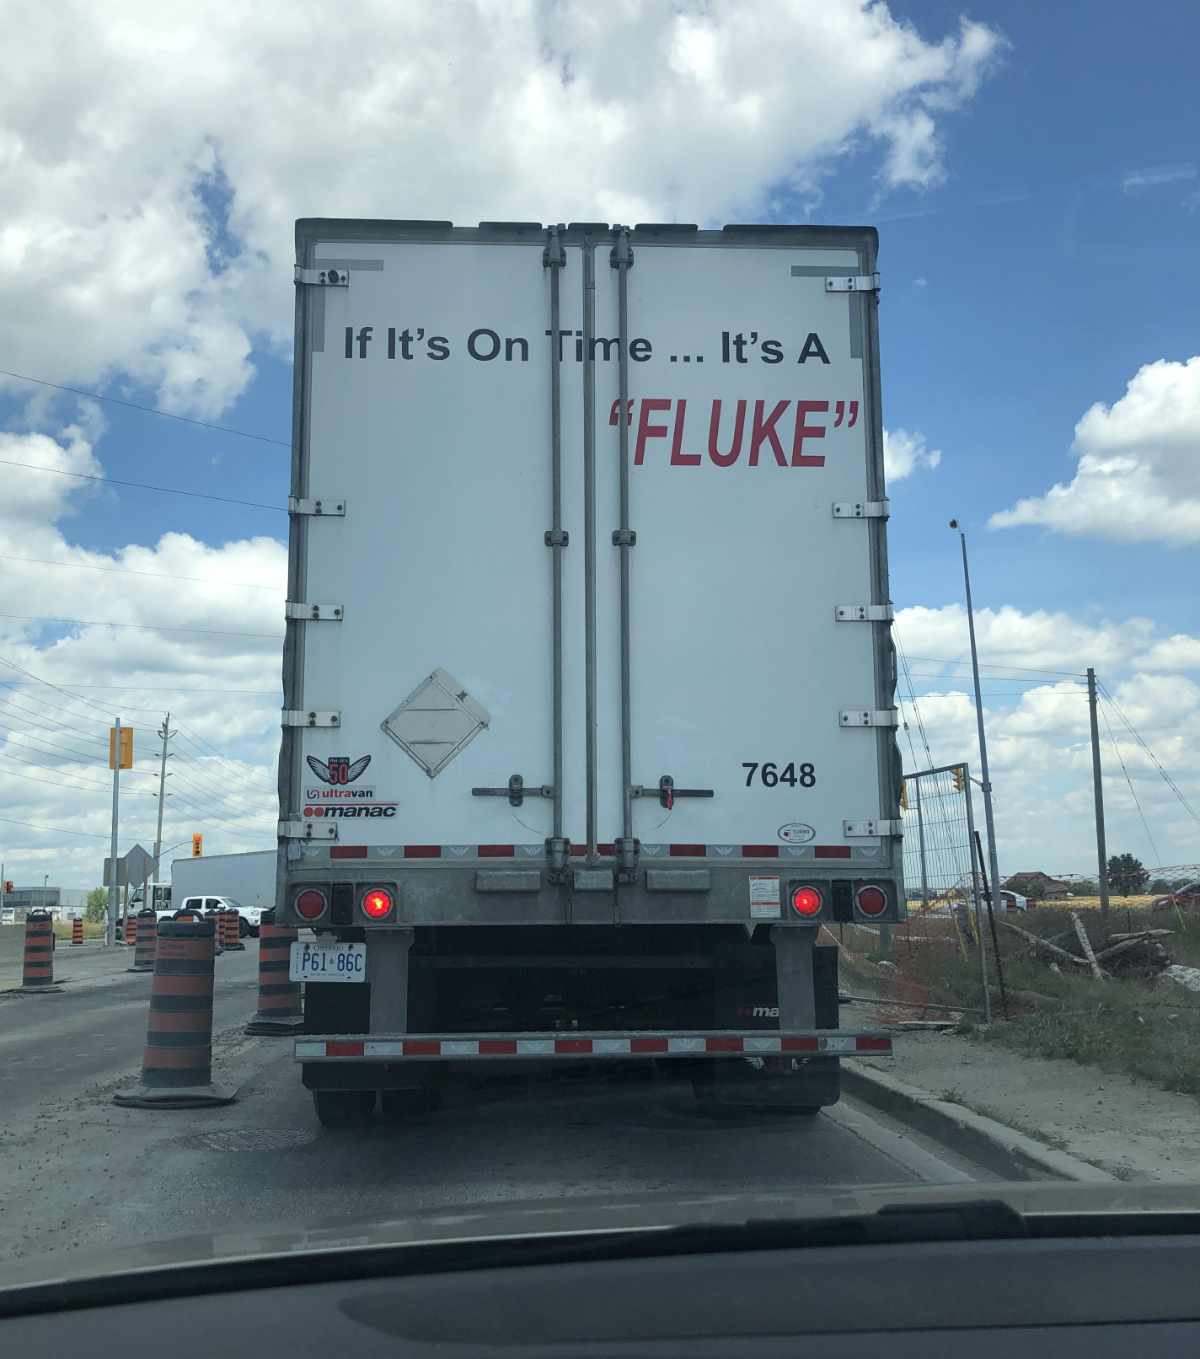 Local truck company name